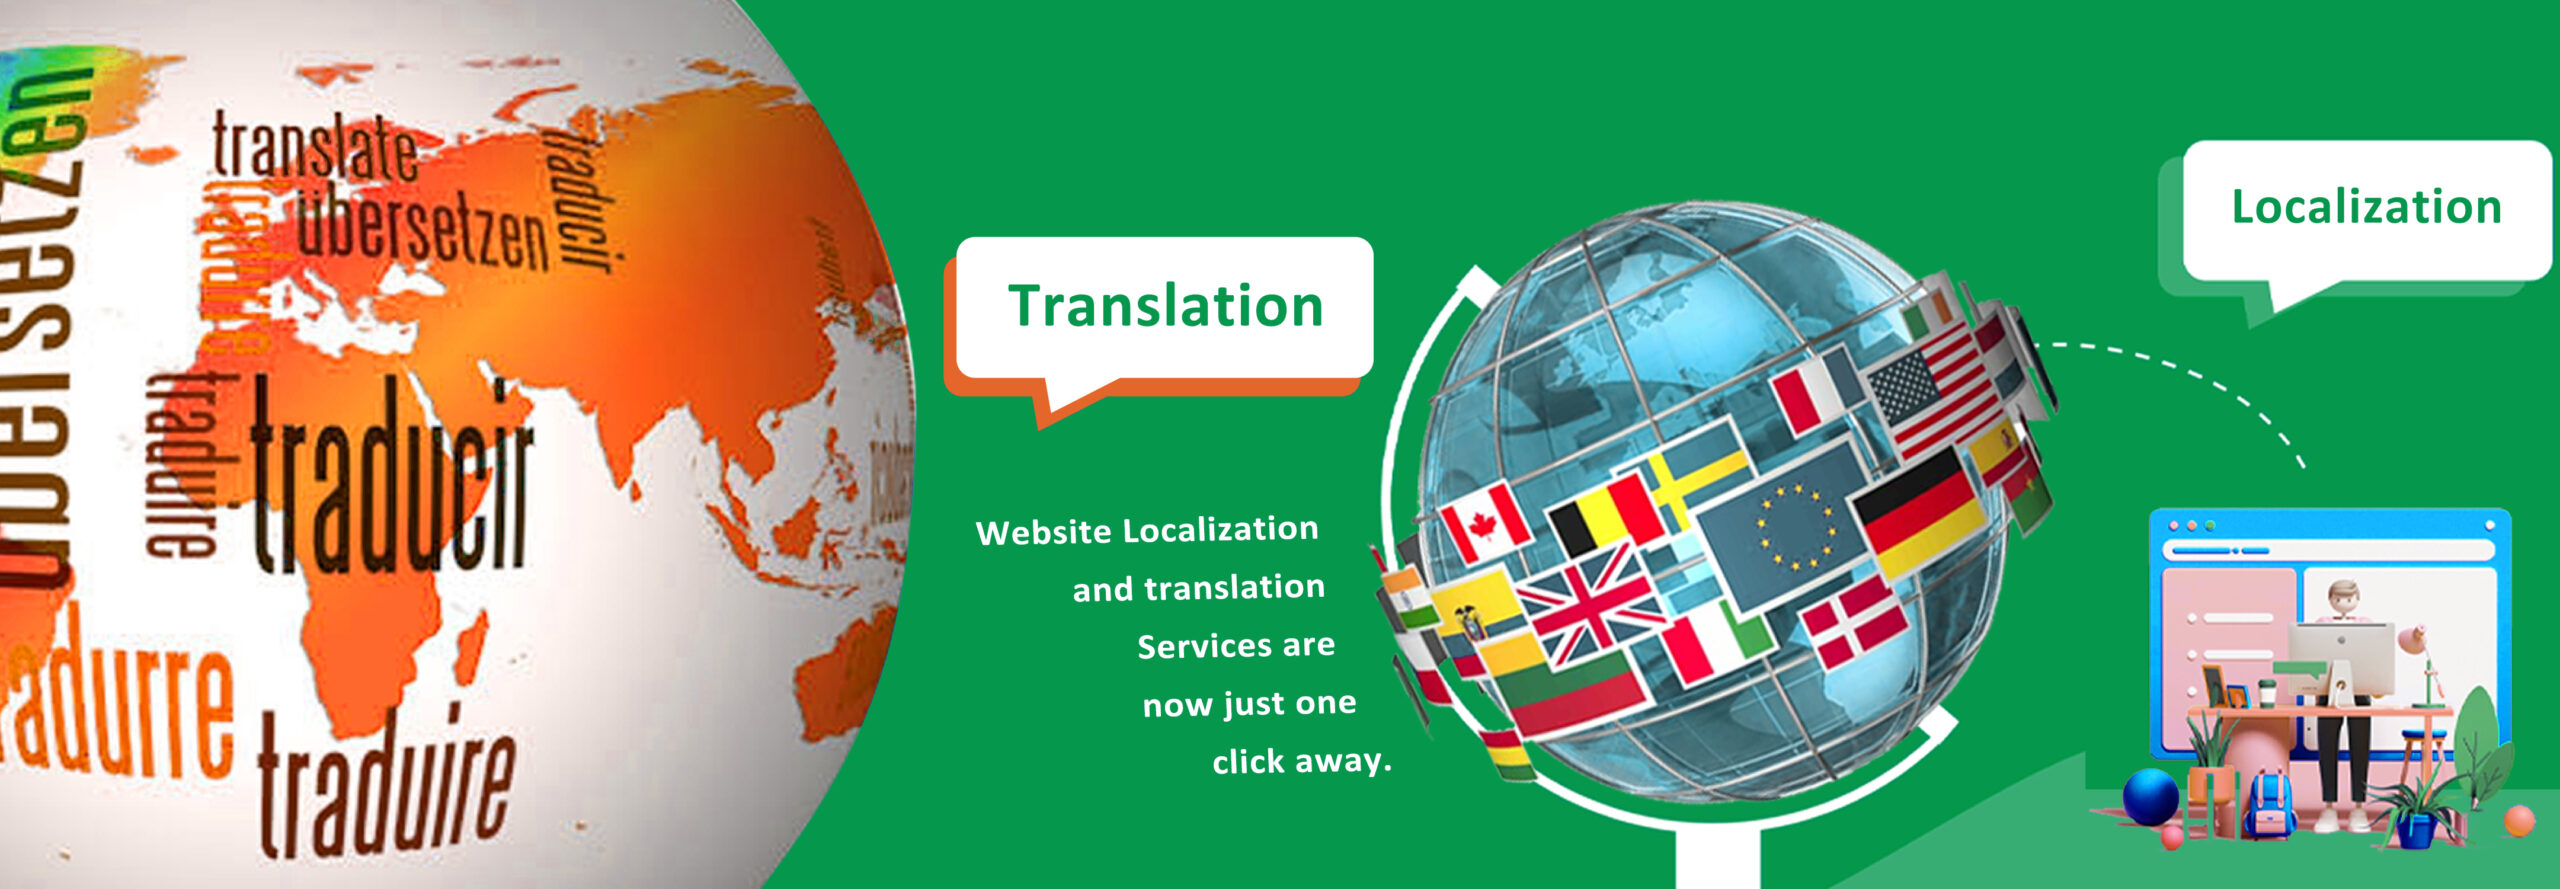 localization and translation hd2